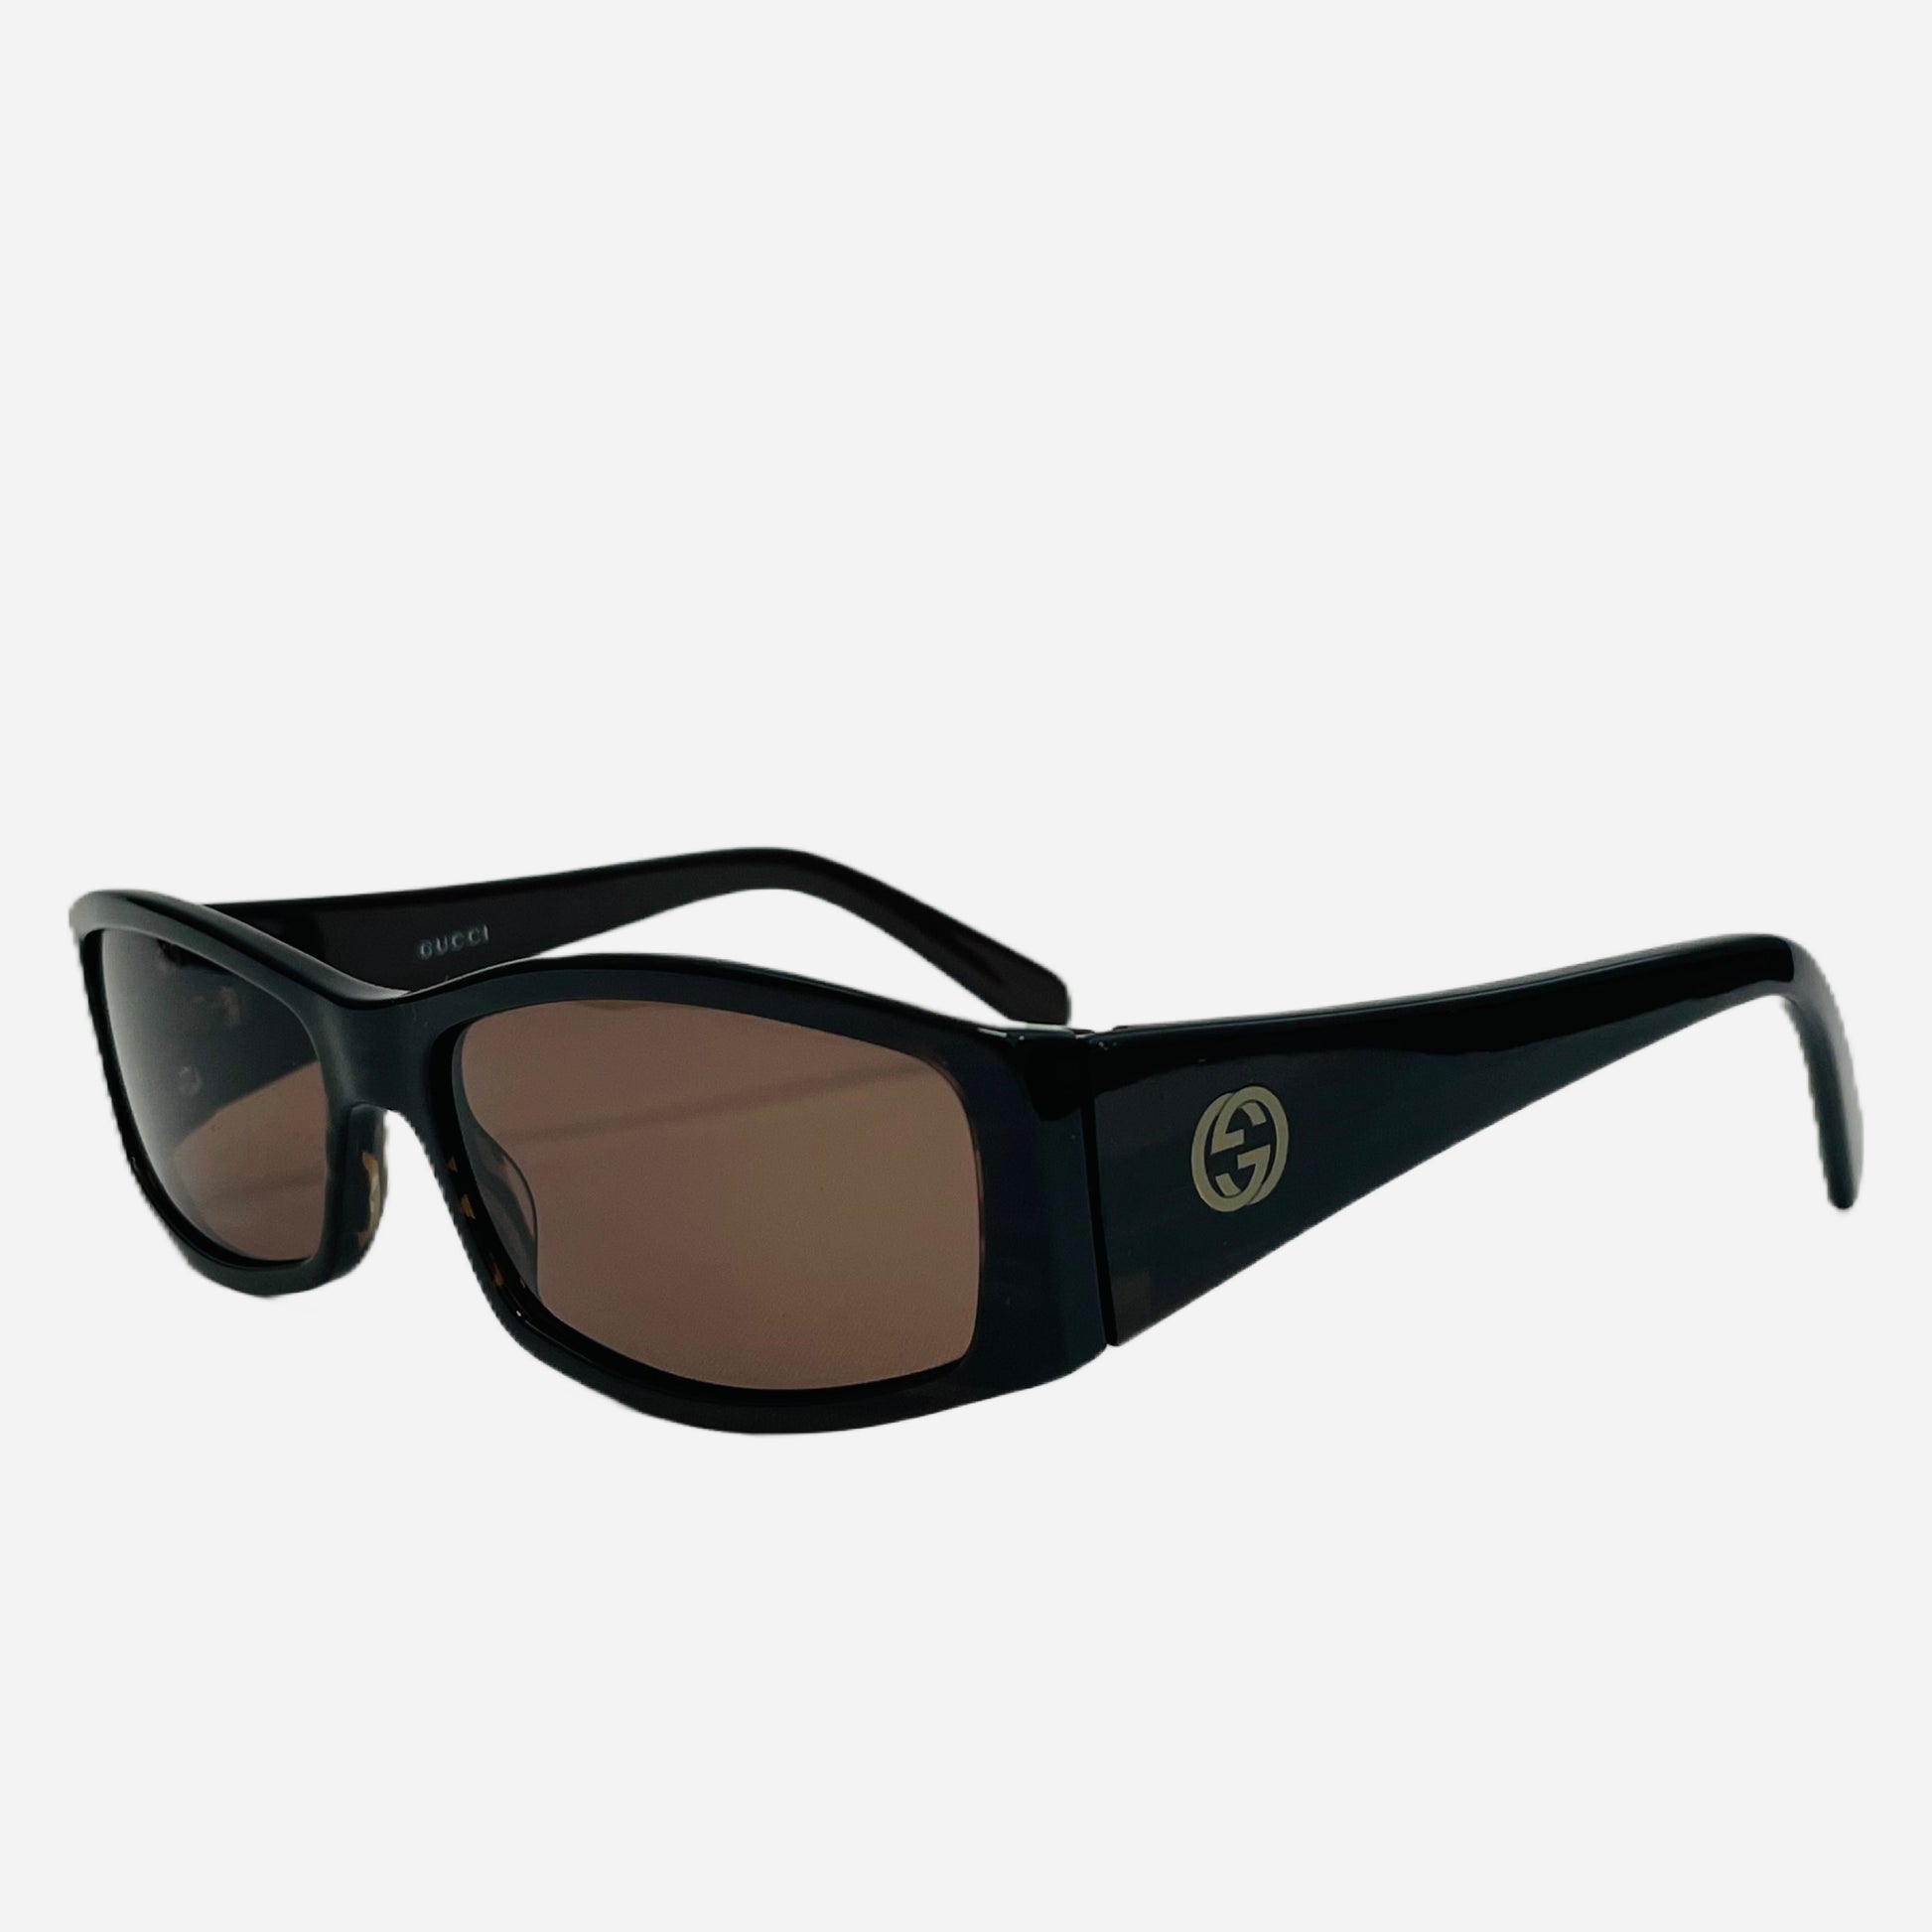 Vintage-Gucci-Sunglasses-Sonnenbrille-Schnelle-Brille-90s-2523_S-The-Seekers-front